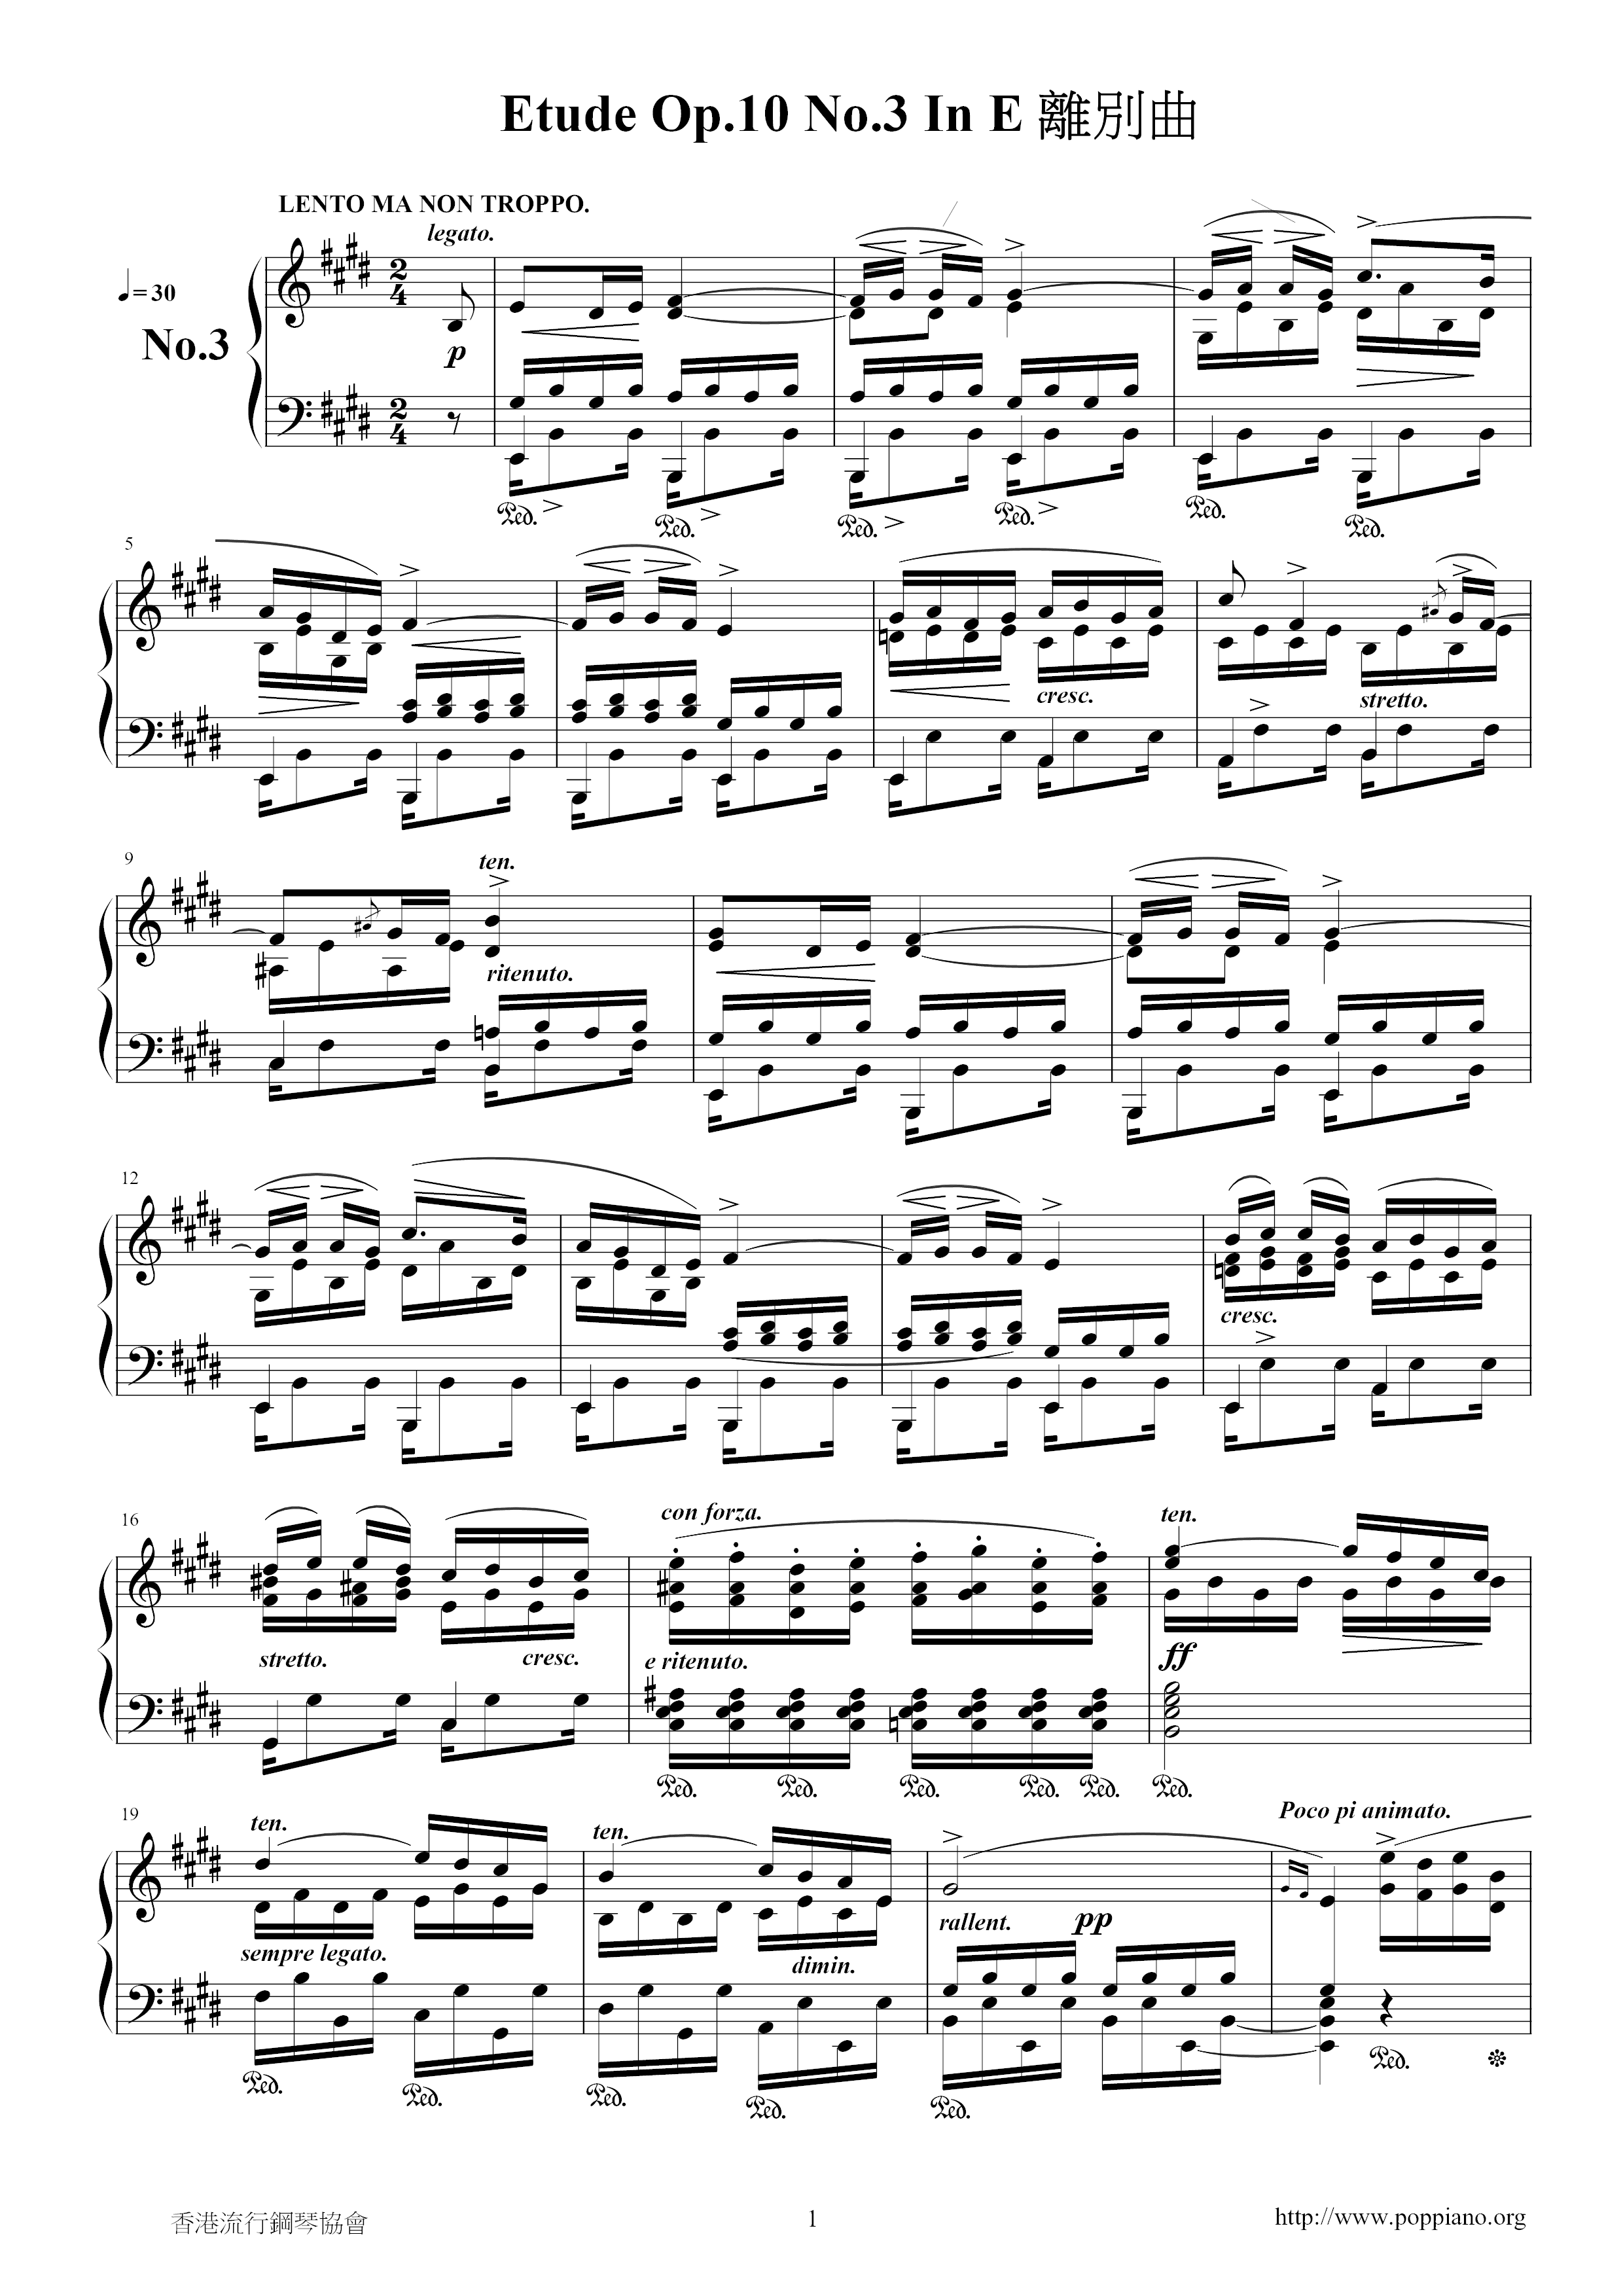 Op. 10, Etude No. 3 離別曲 Score